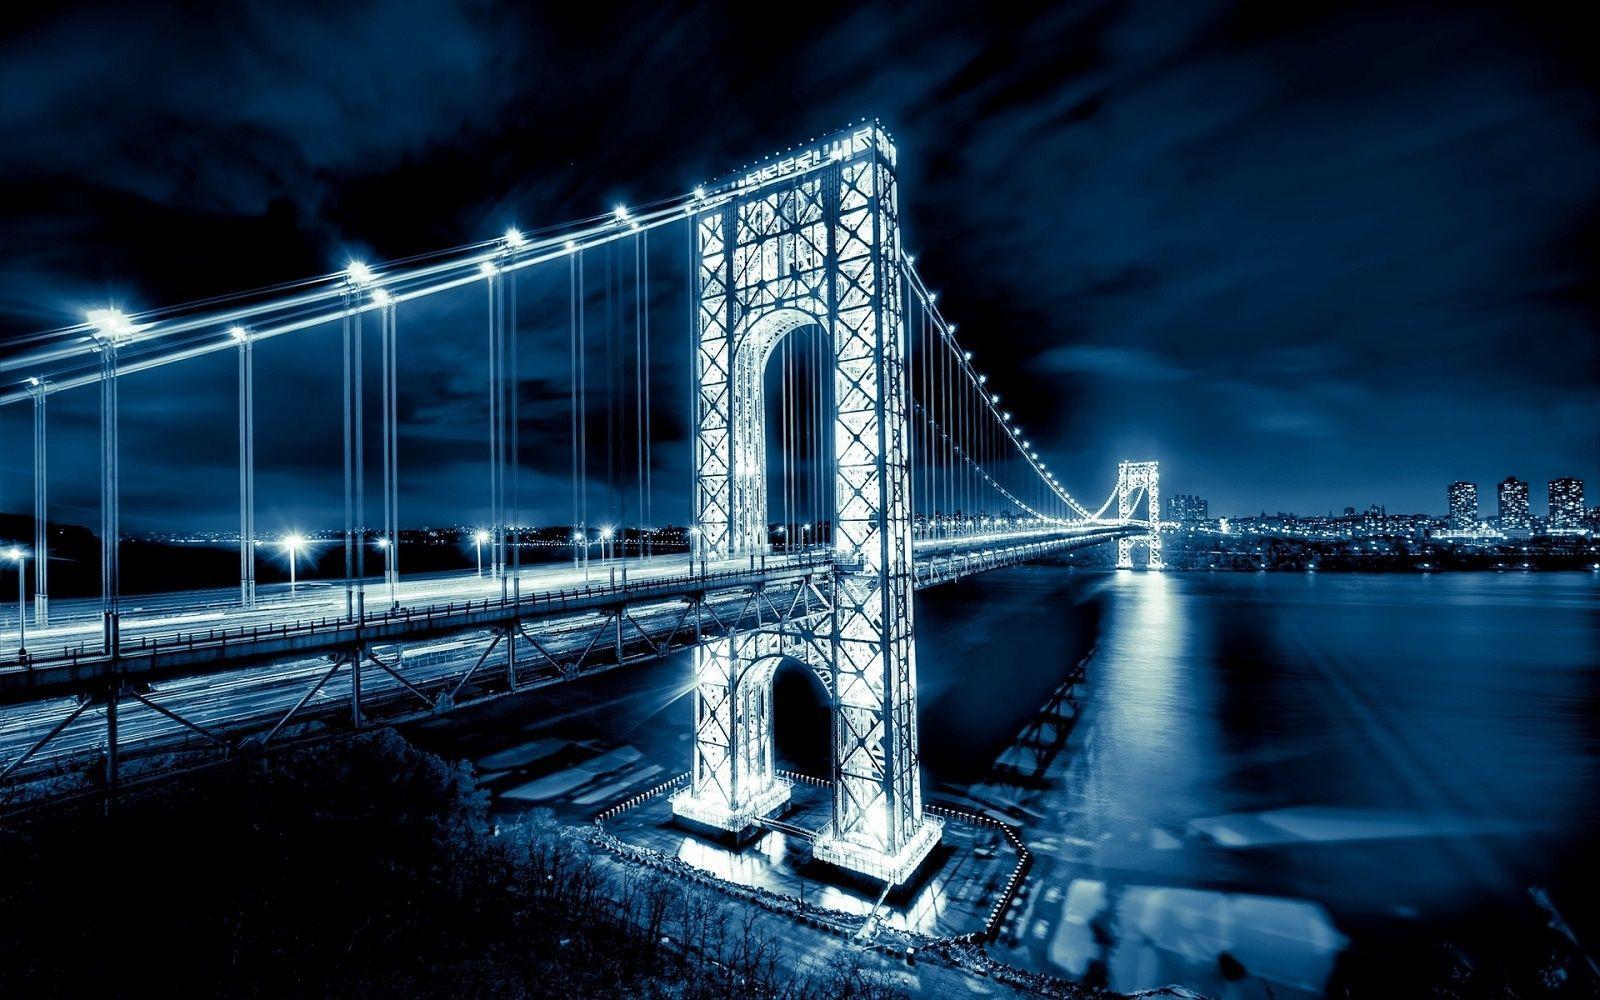 George Washington Bridge Wonderful Night View Over Hudson River